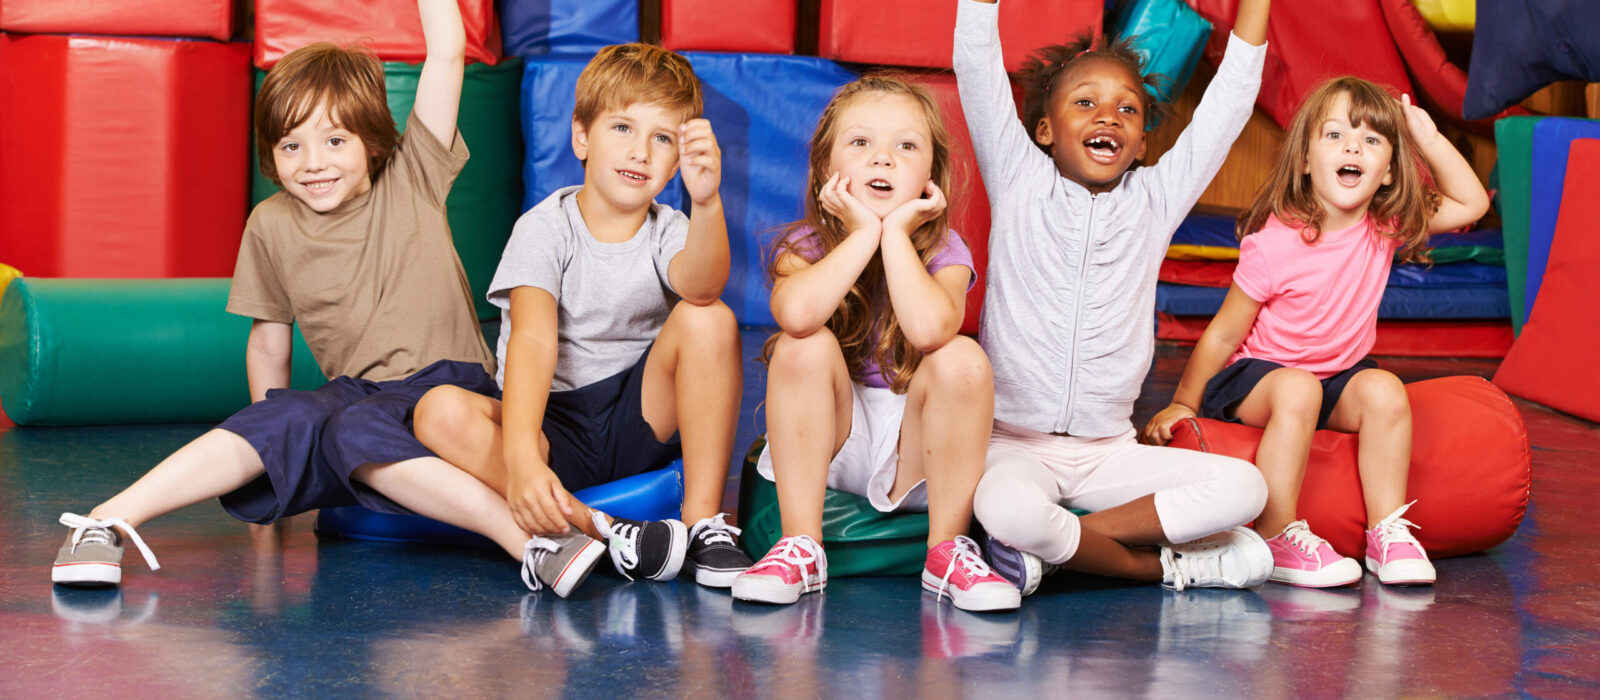 Children cheering in gym of school - Leap into Learning Preschool